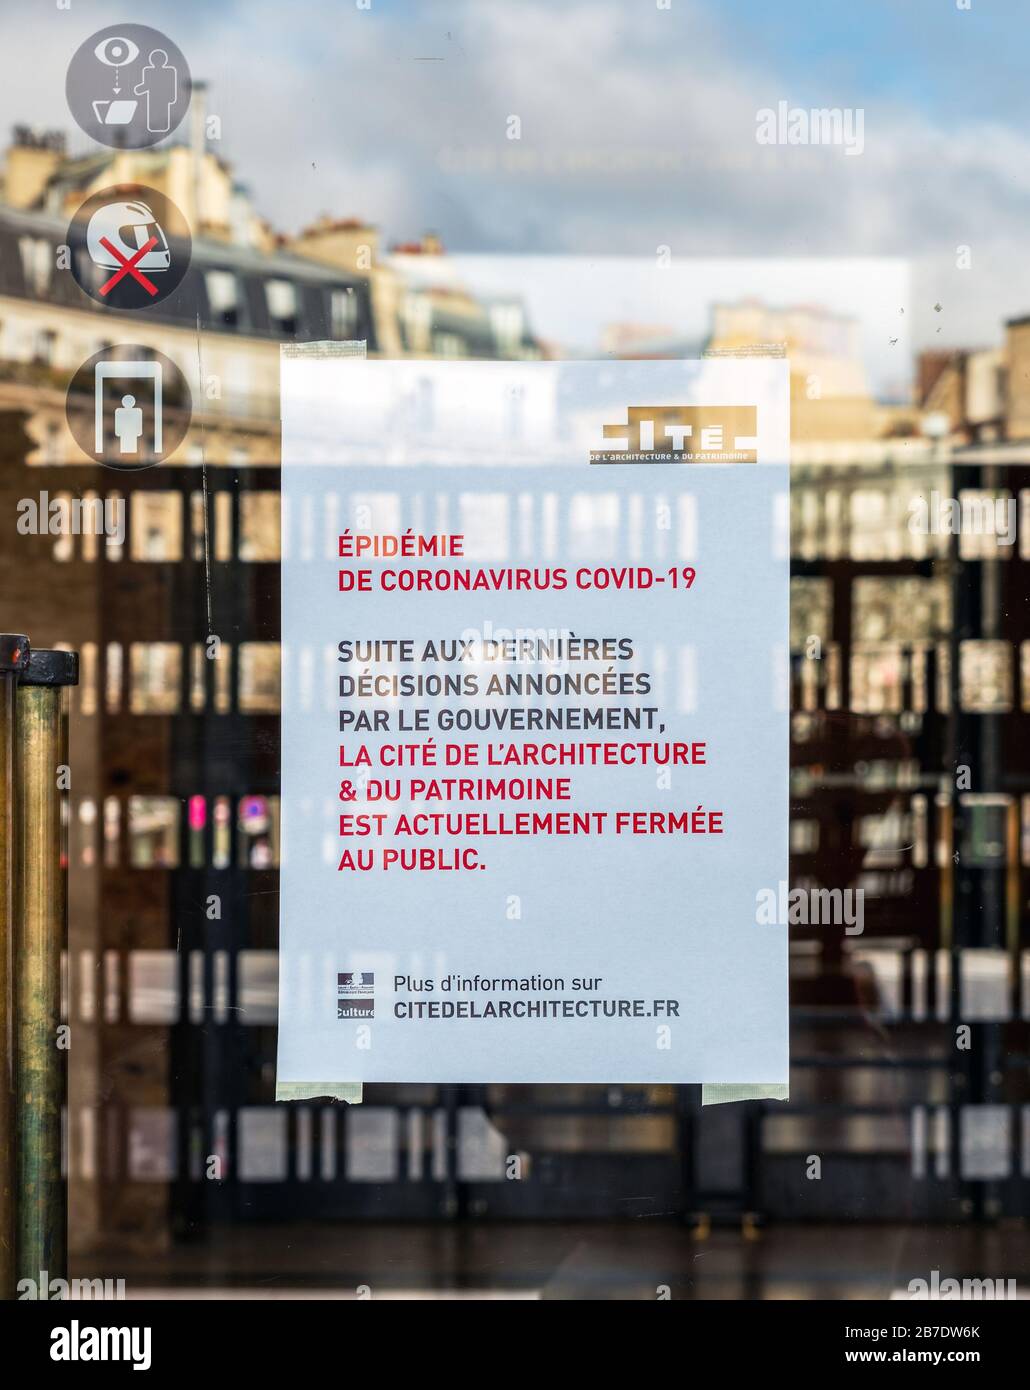 Palais de chaillot closed because of Coronavirus epidemic - Paris, France Stock Photo